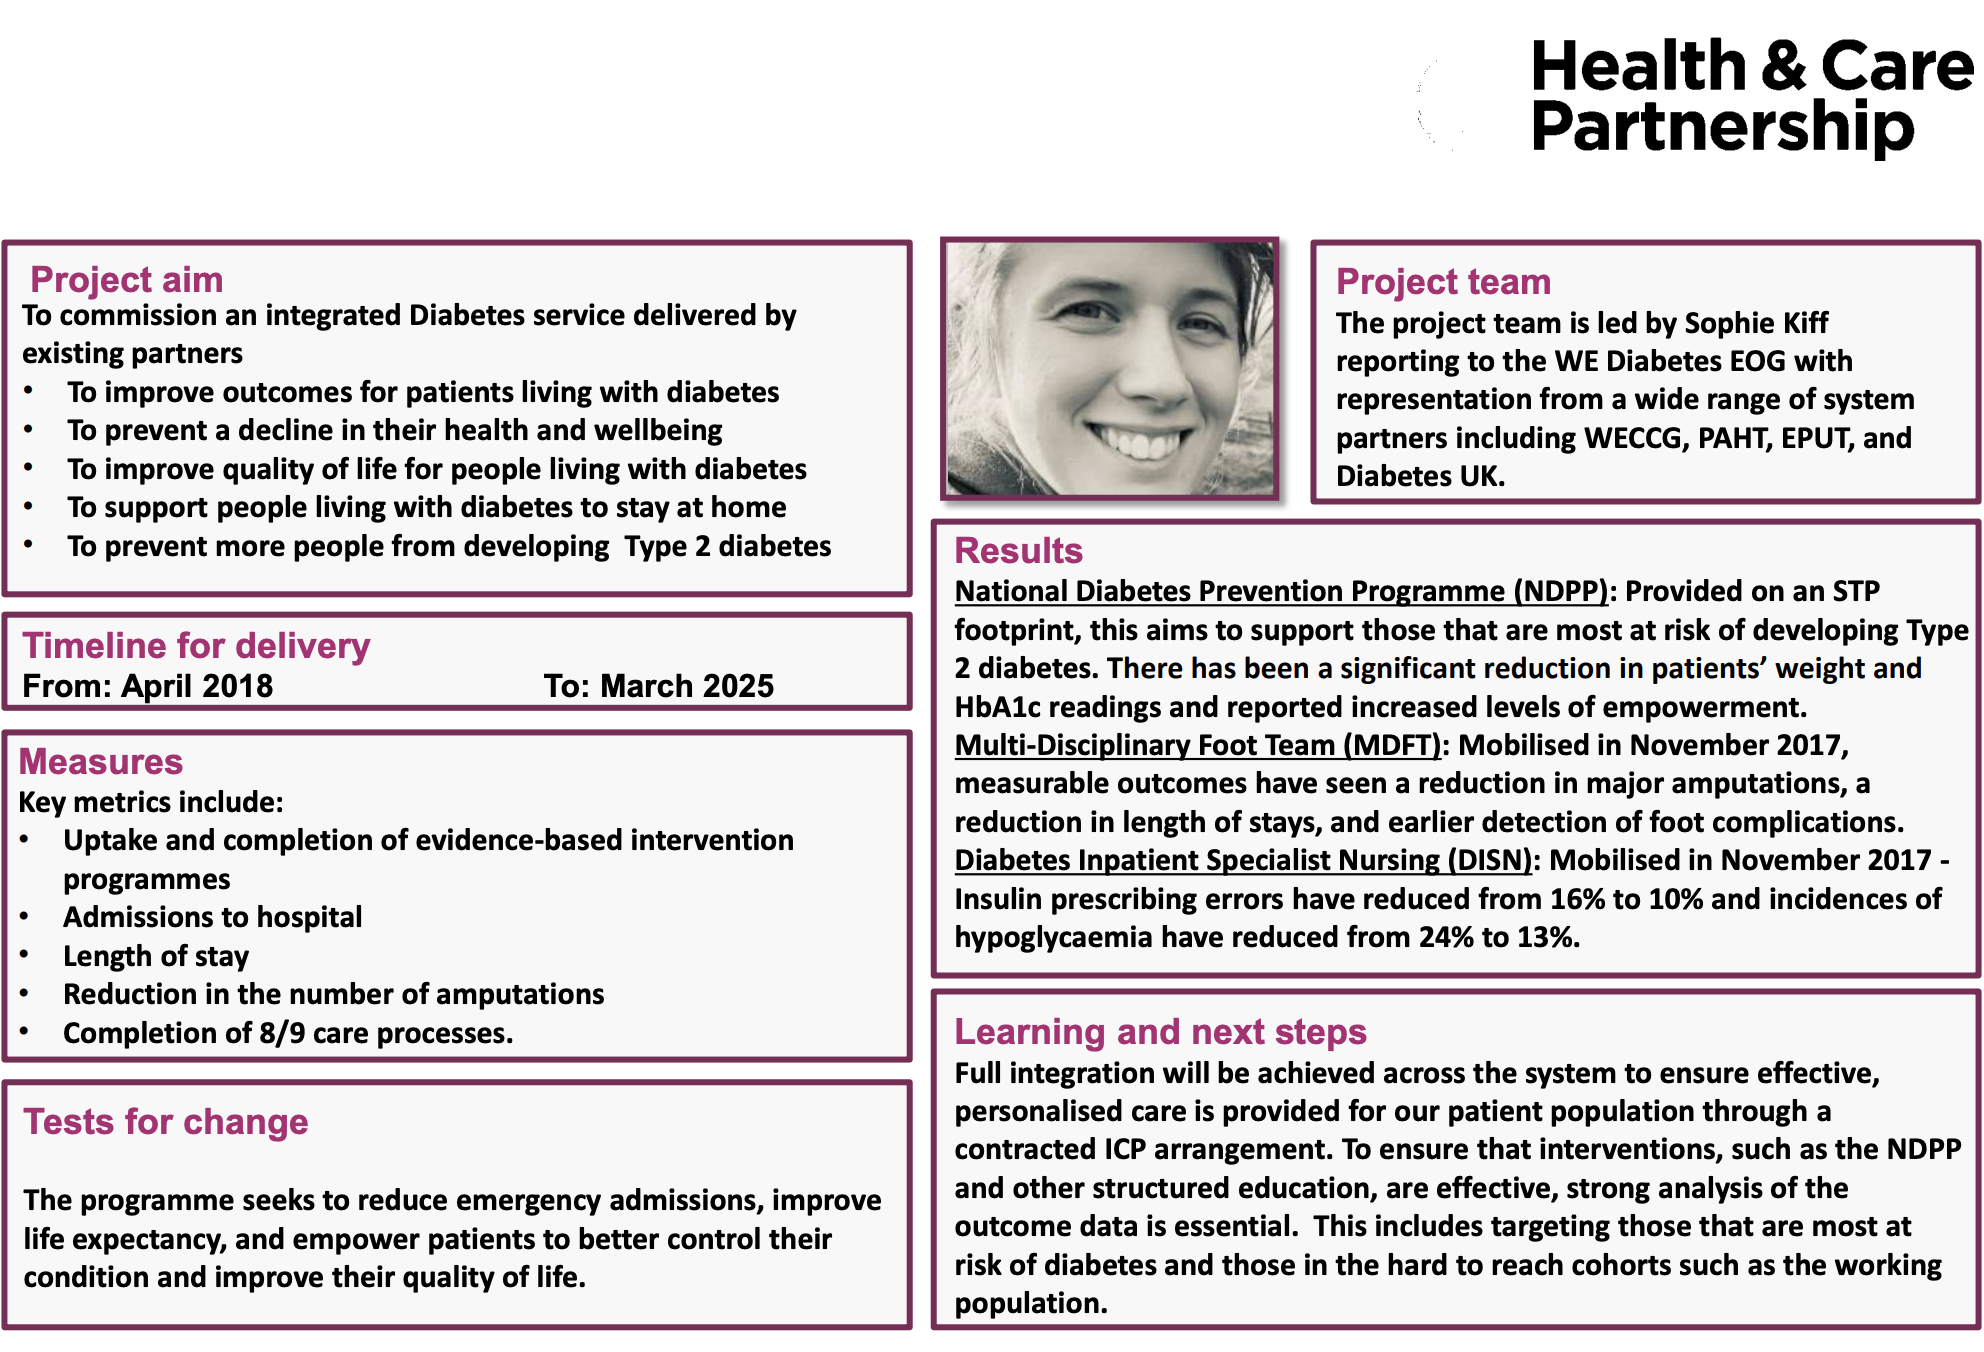 West Essex Healh & Care Partnership - Diabetes - @QualityFirstPAH featured image